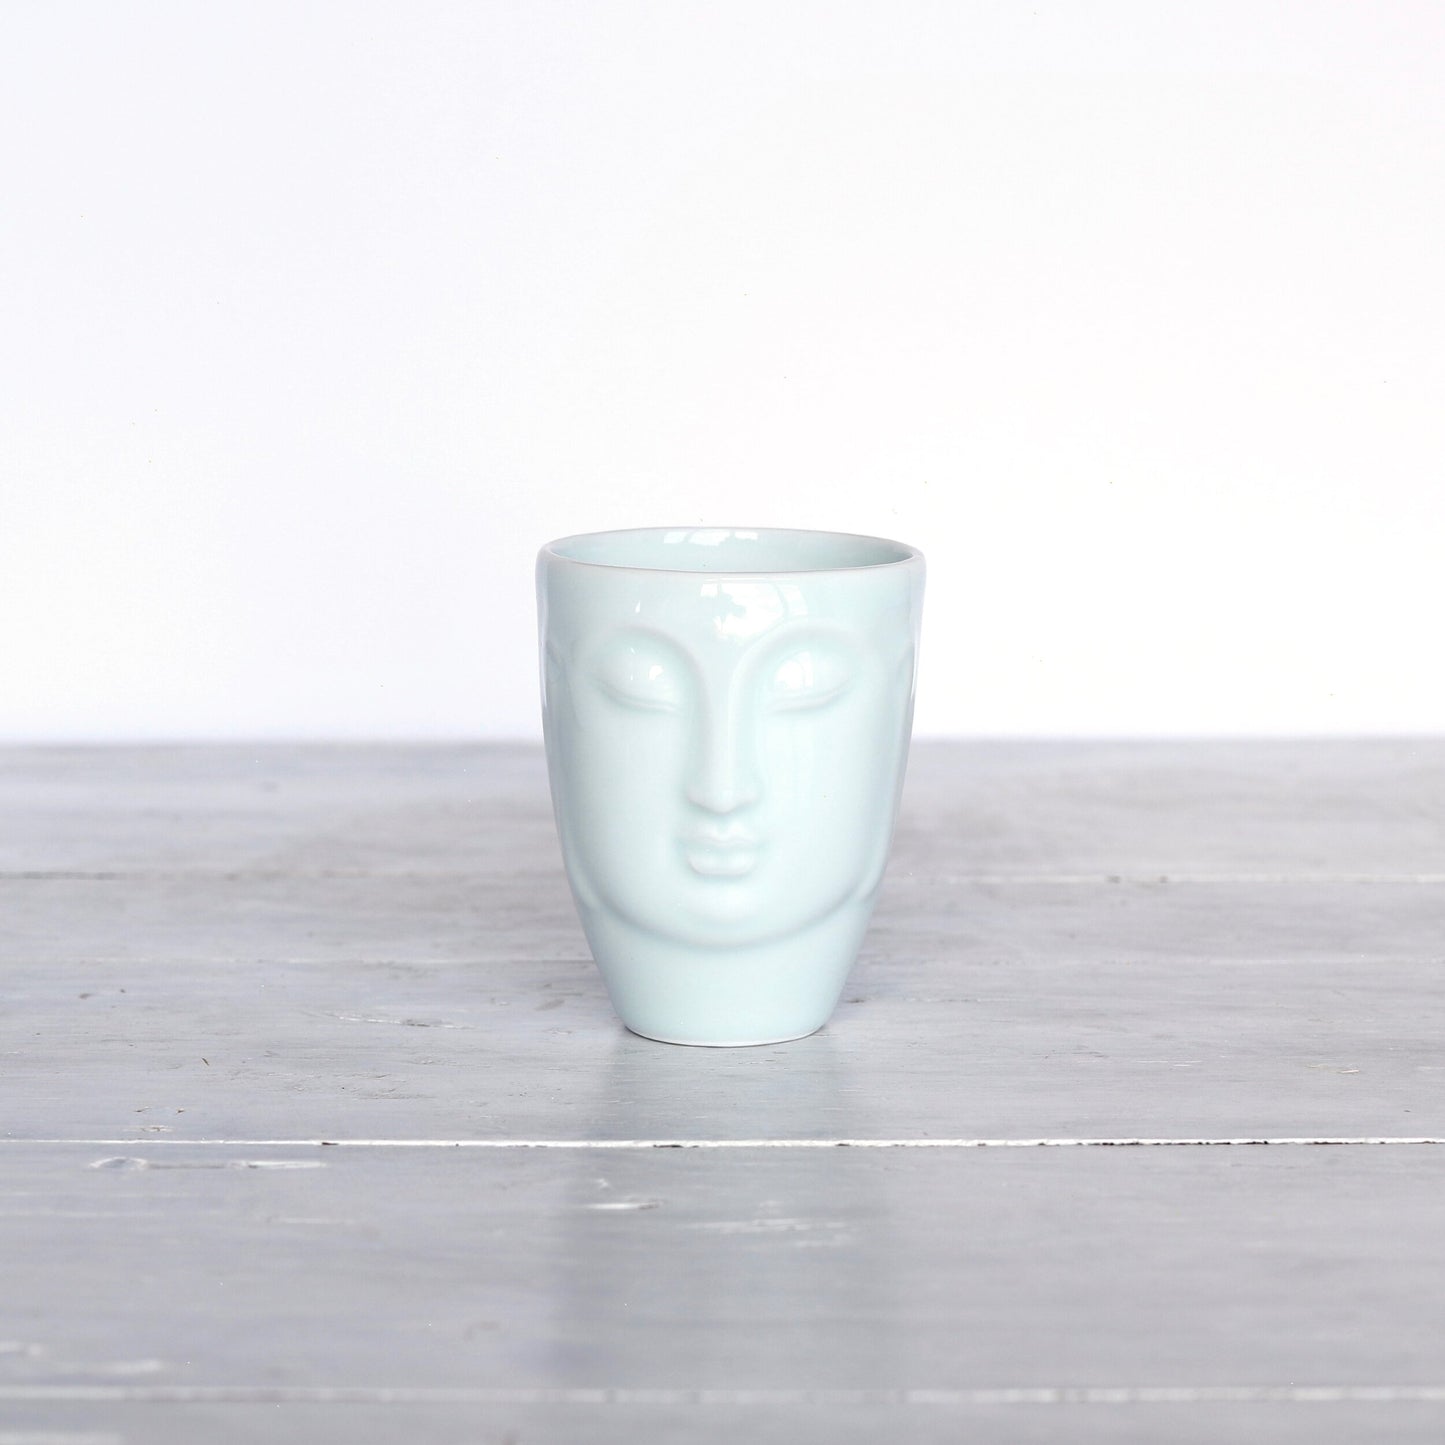 Meditative Cups in Celadon